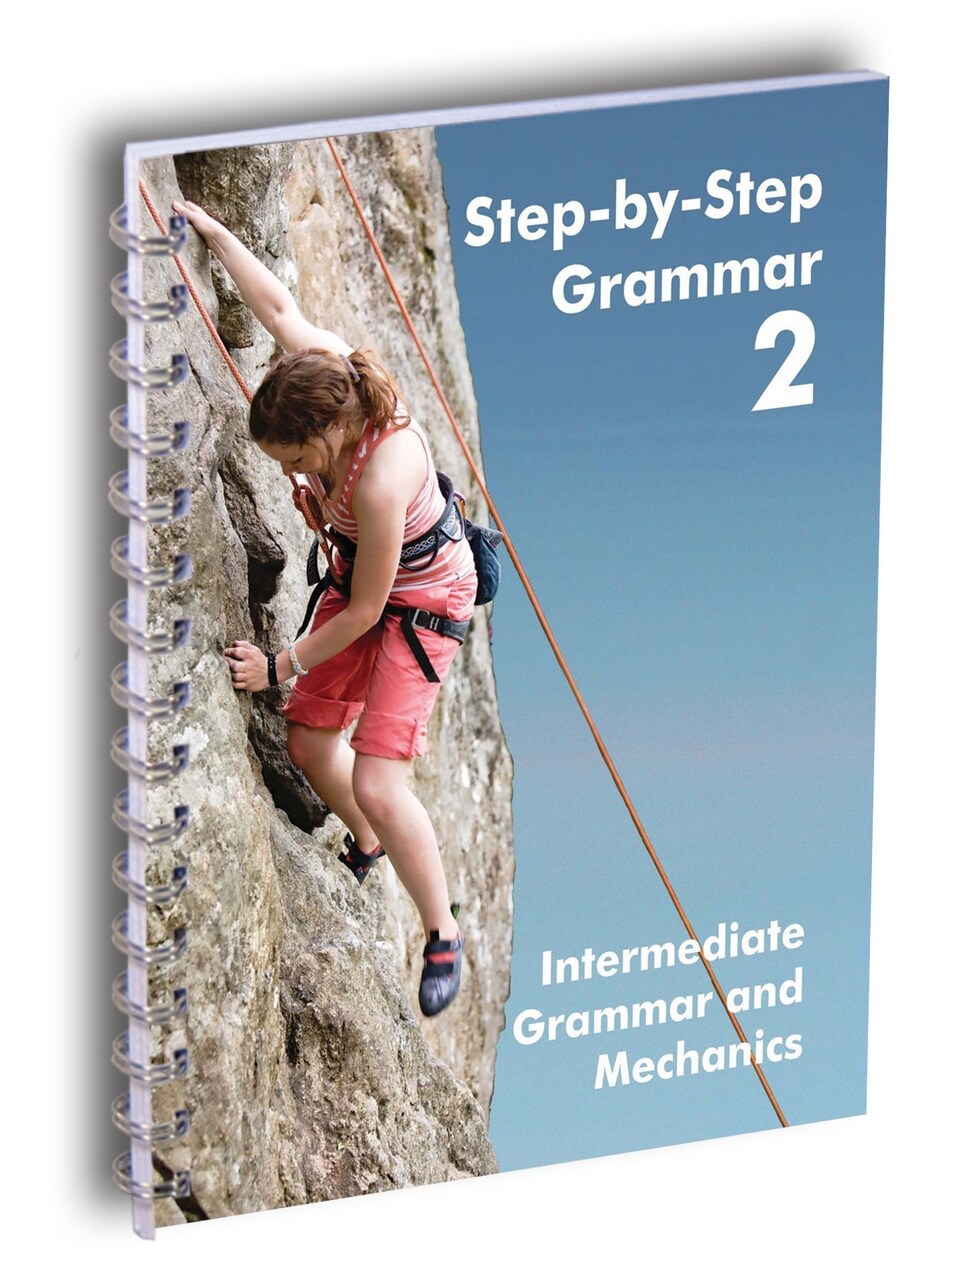 Step-by-Step Grammar 2: Intermediate Grammar and Mechanics - book only